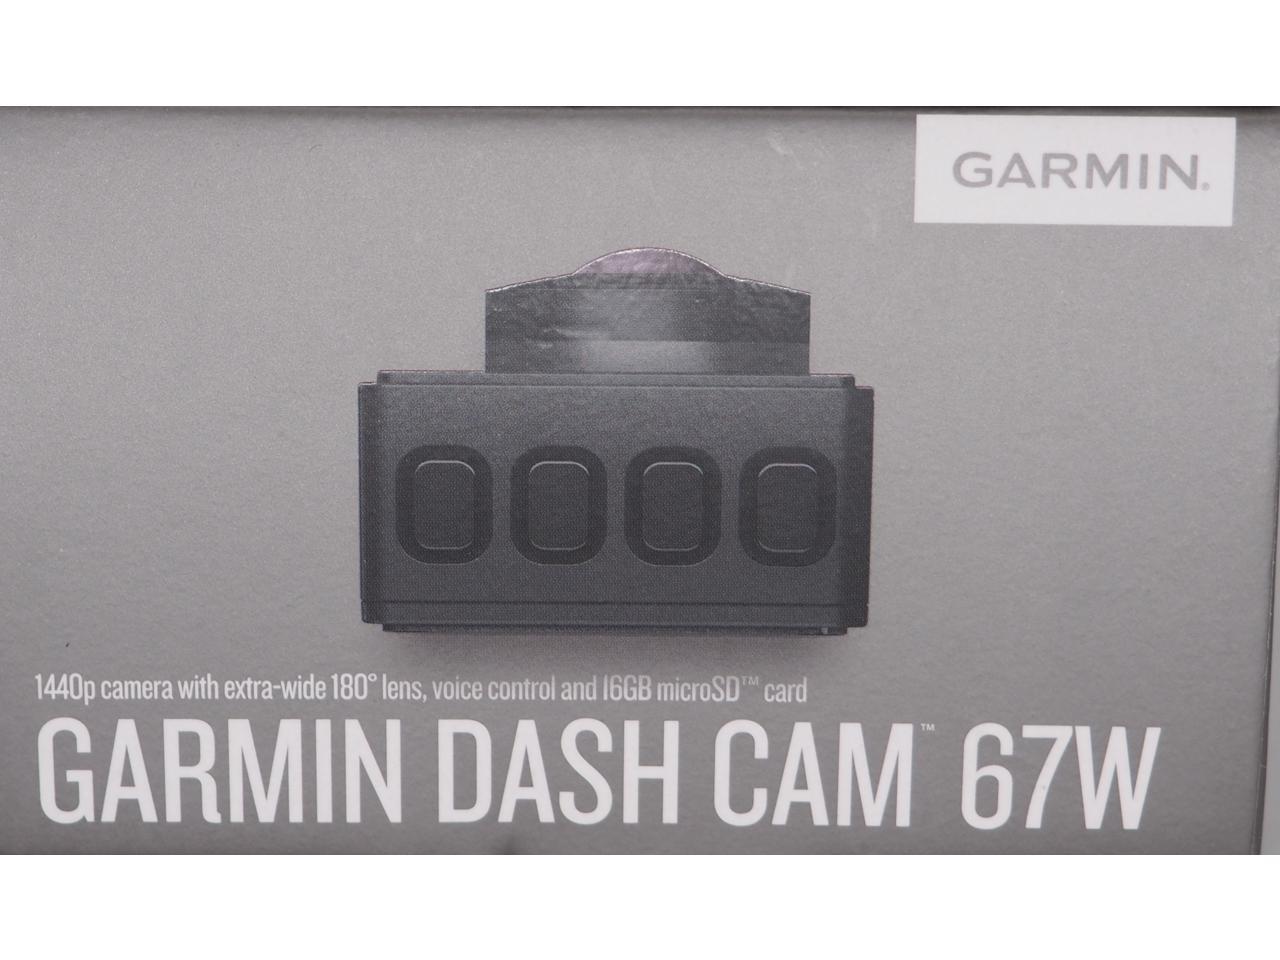 Garmin 67W 1440p Dash Cam, Black #010-02505-05 - image 4 of 21